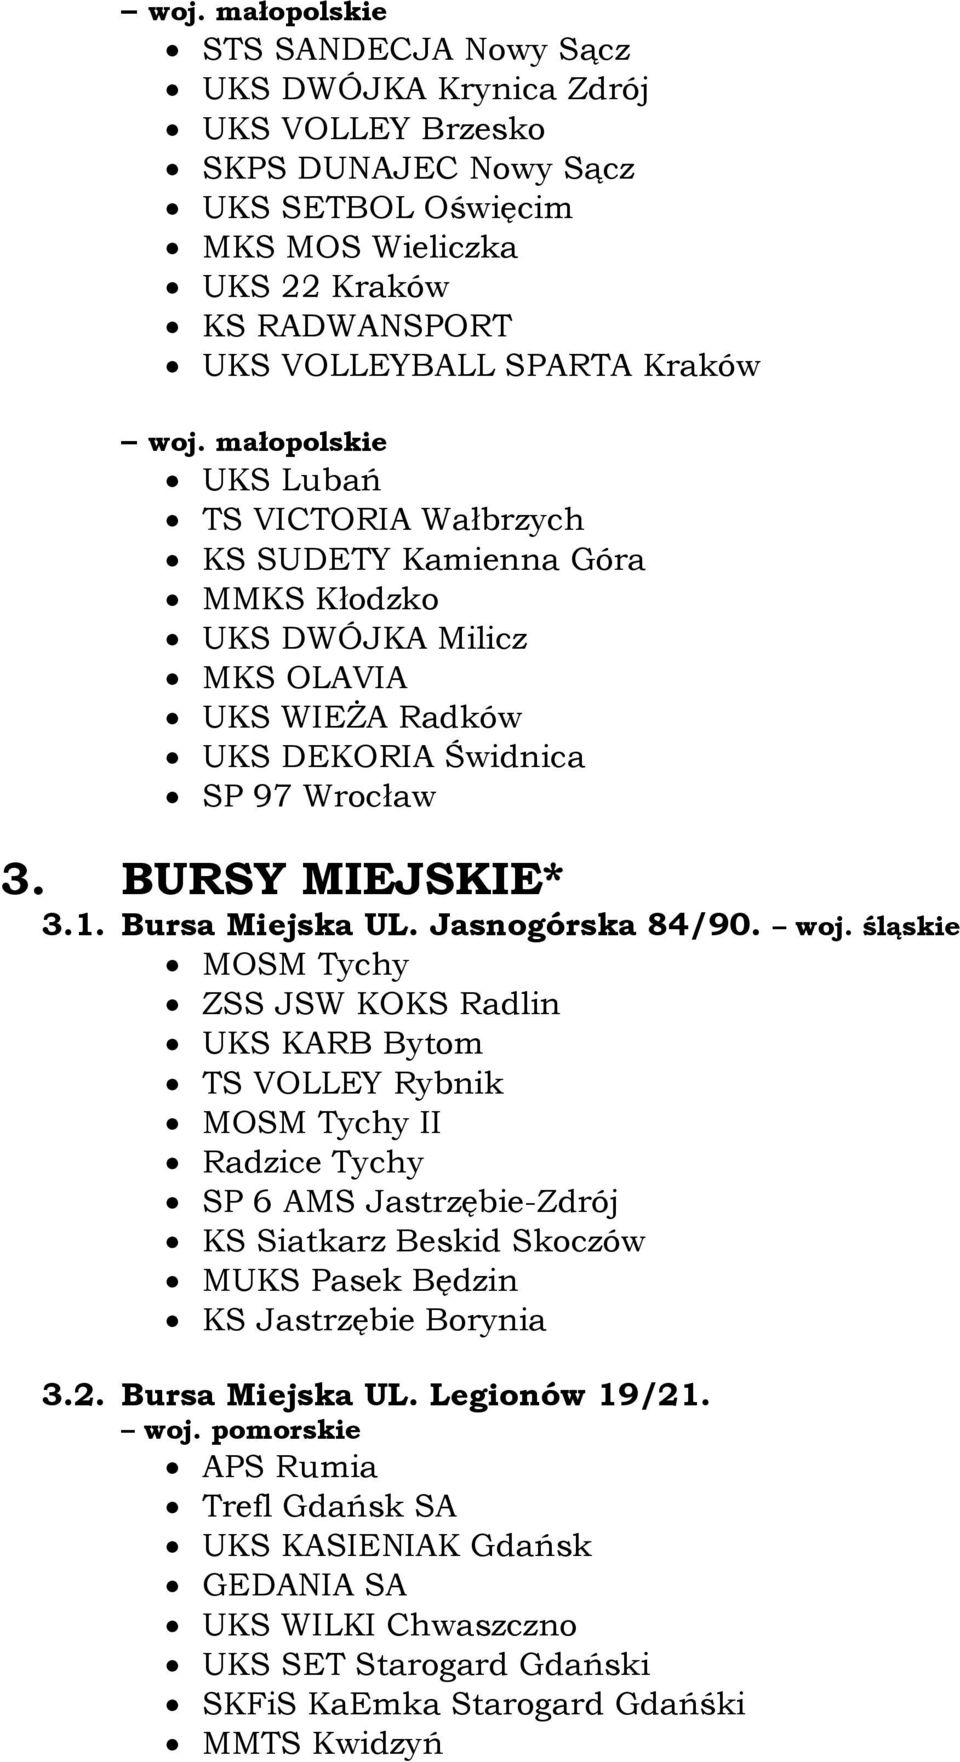 Bursa Miejska UL. Jasnogórska 84/90. woj.